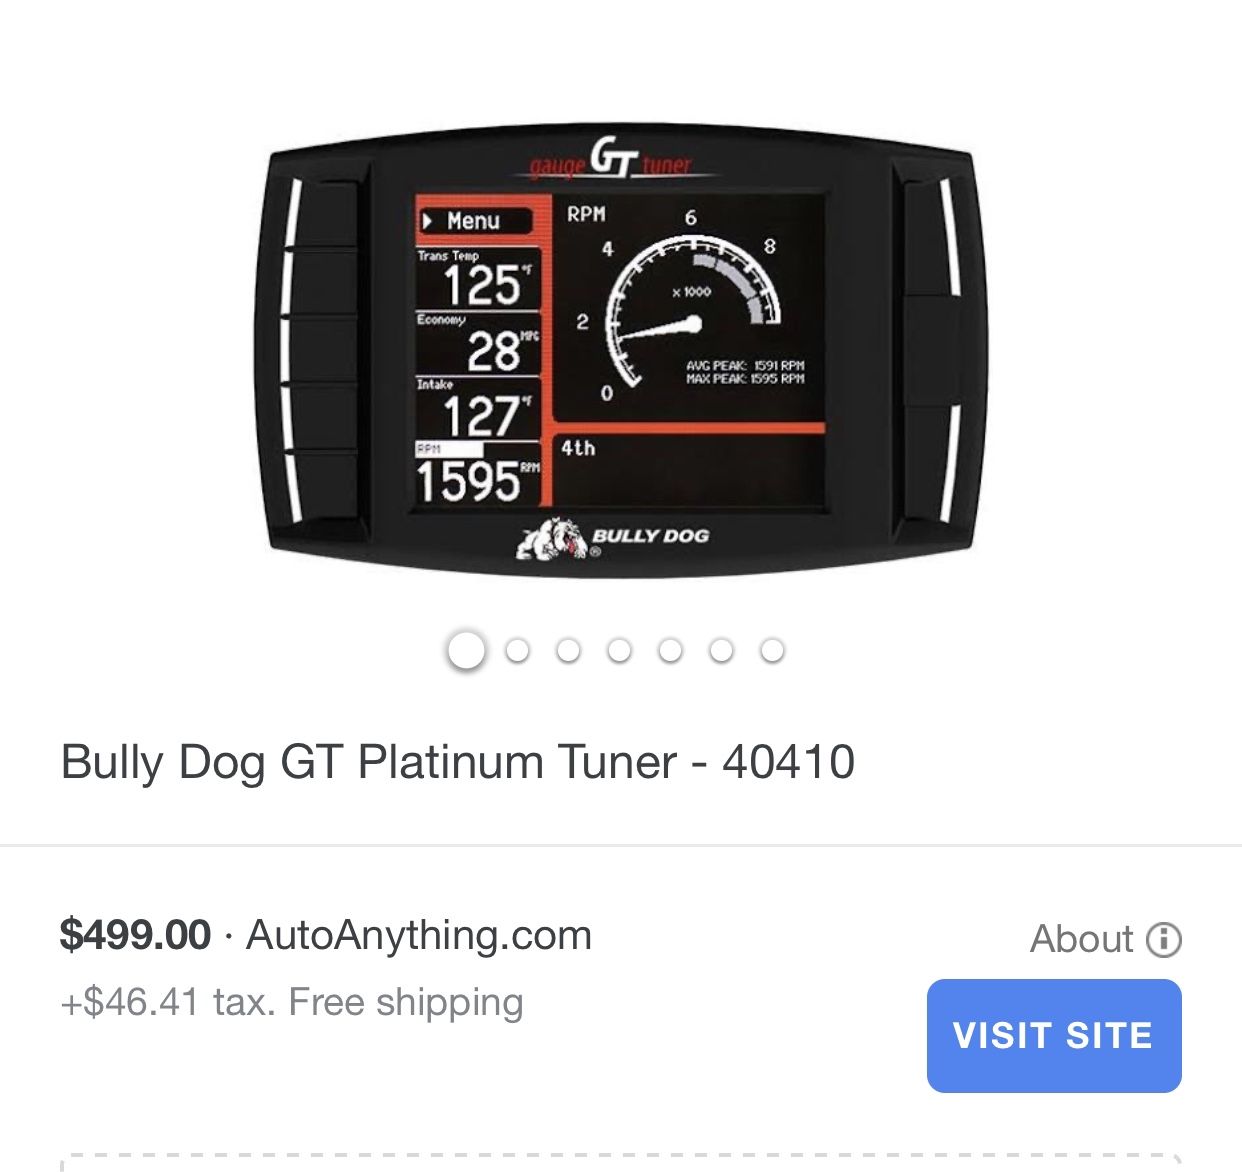 Bully Dog GT Platinum Tuner - 40410